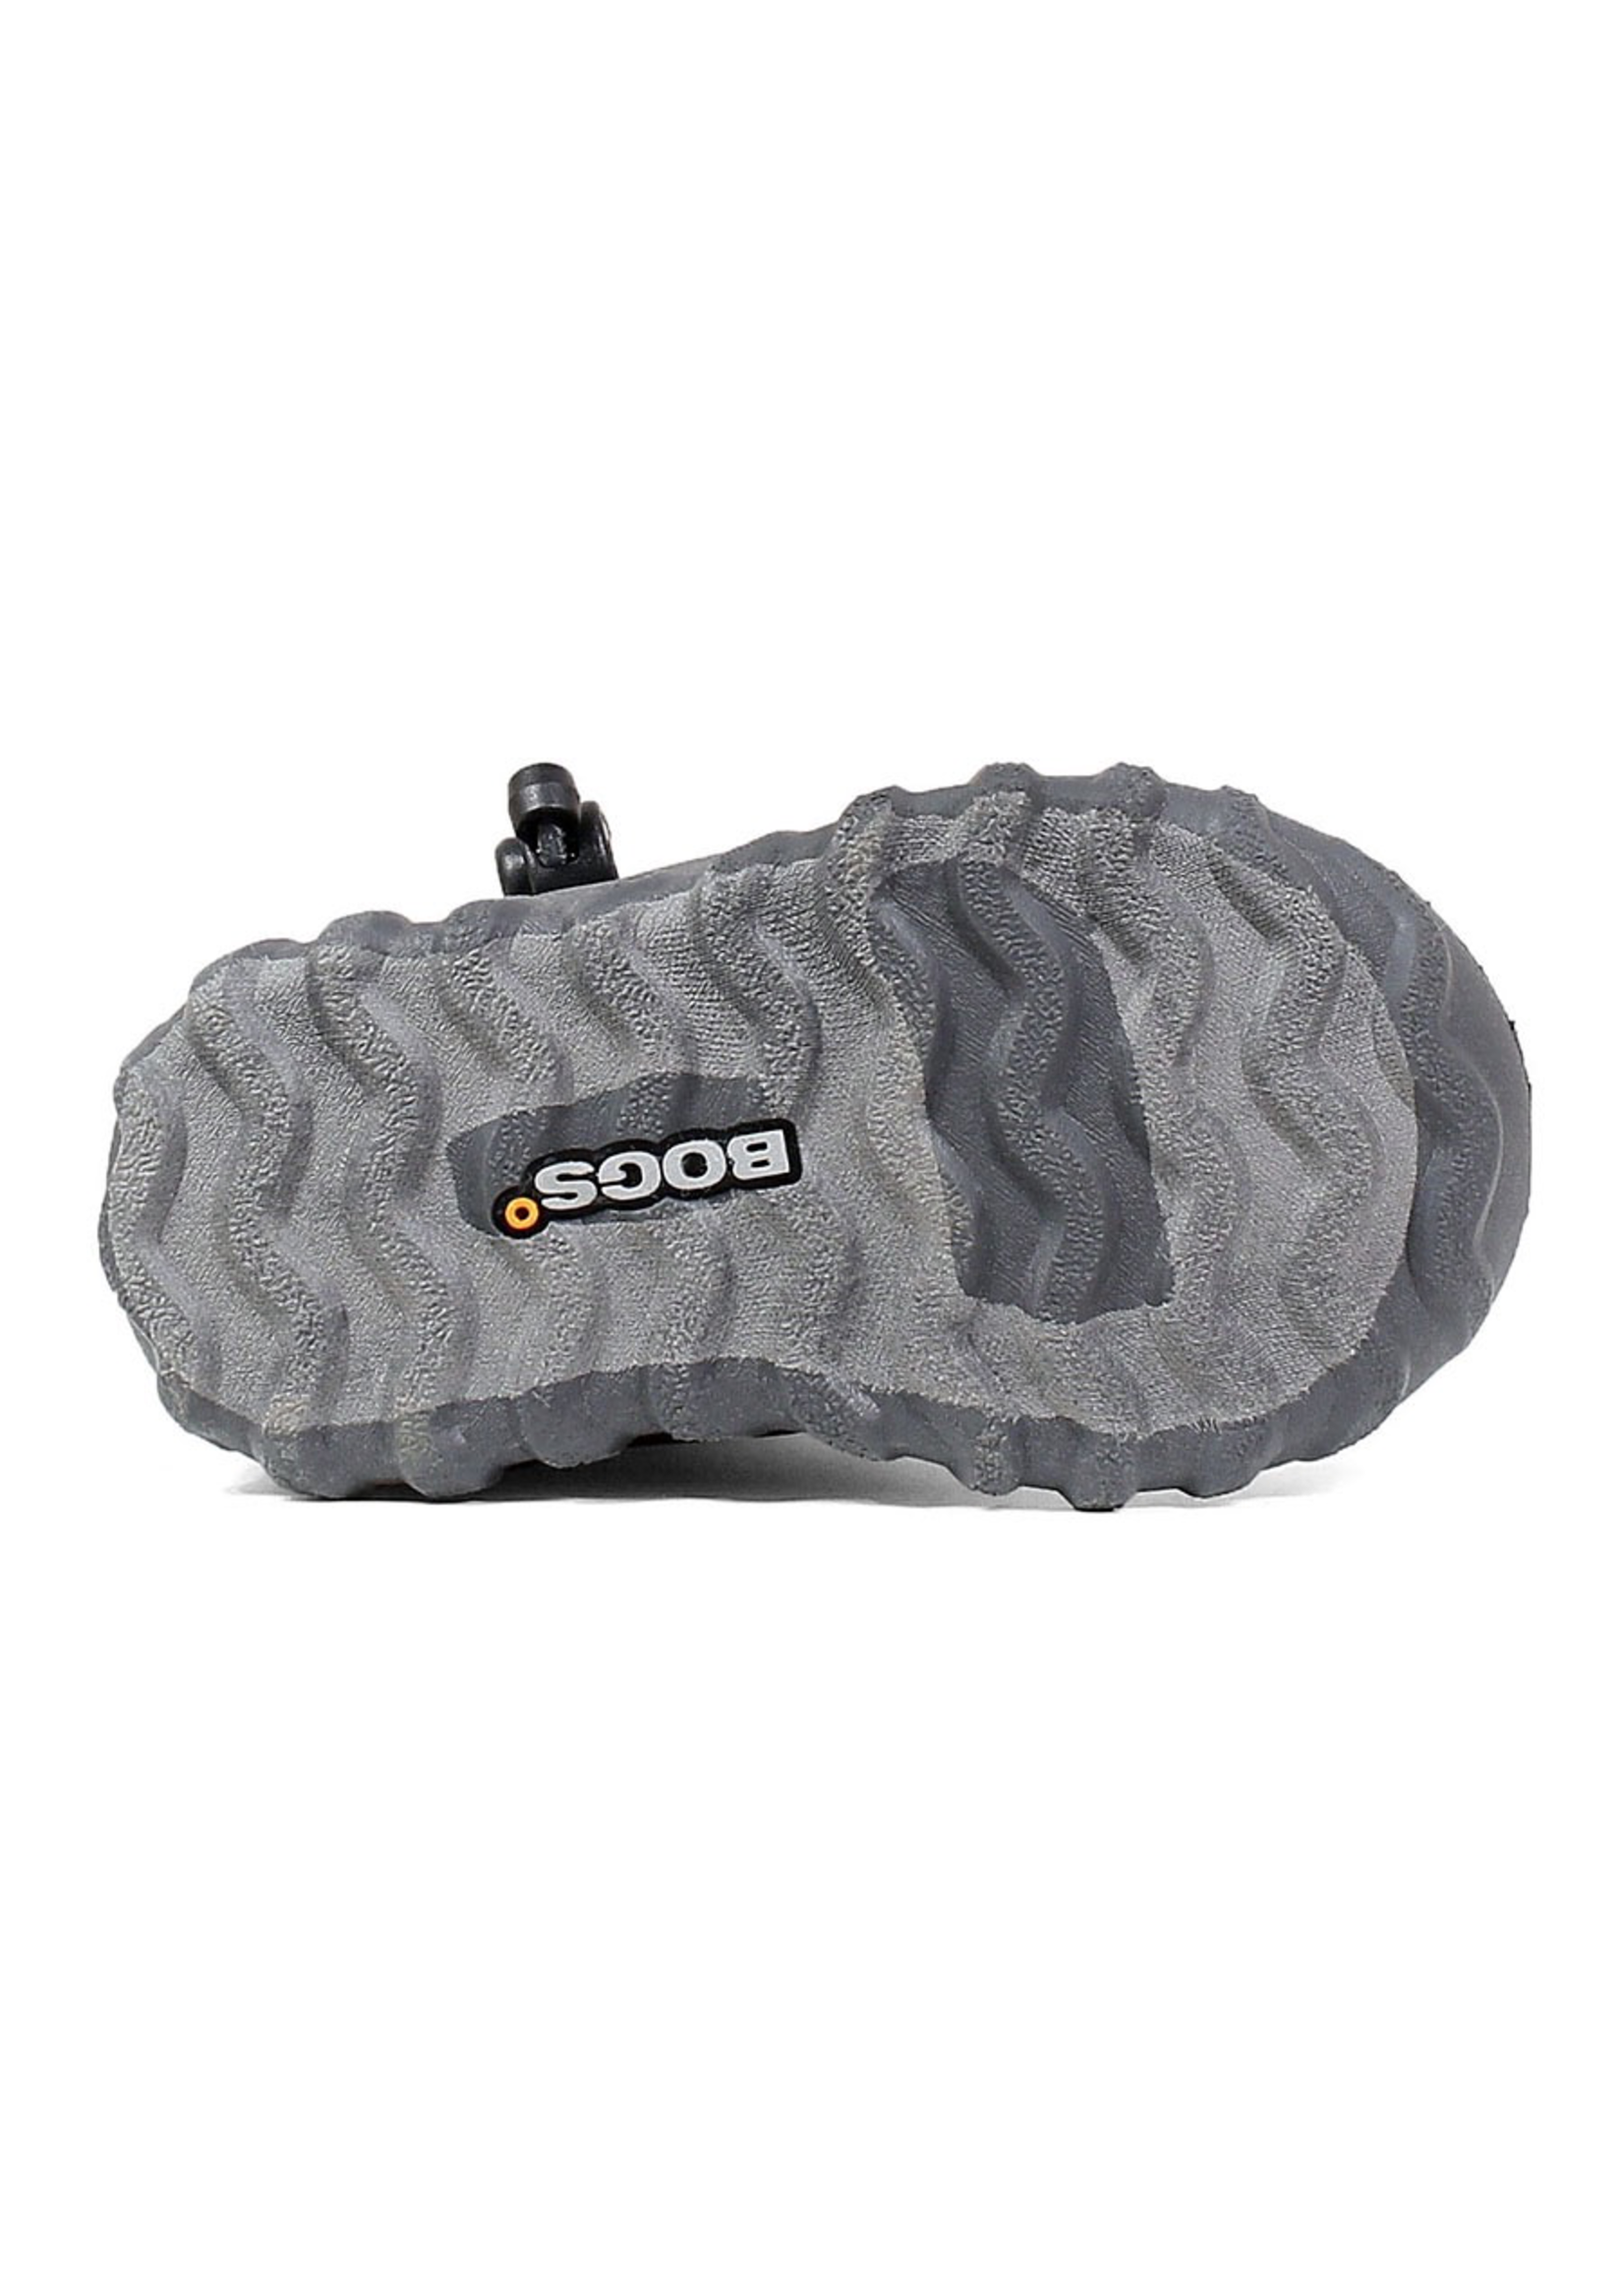 Bogs Bogs, Kids’ B-MOC Mountain Snow Boots - P-56551